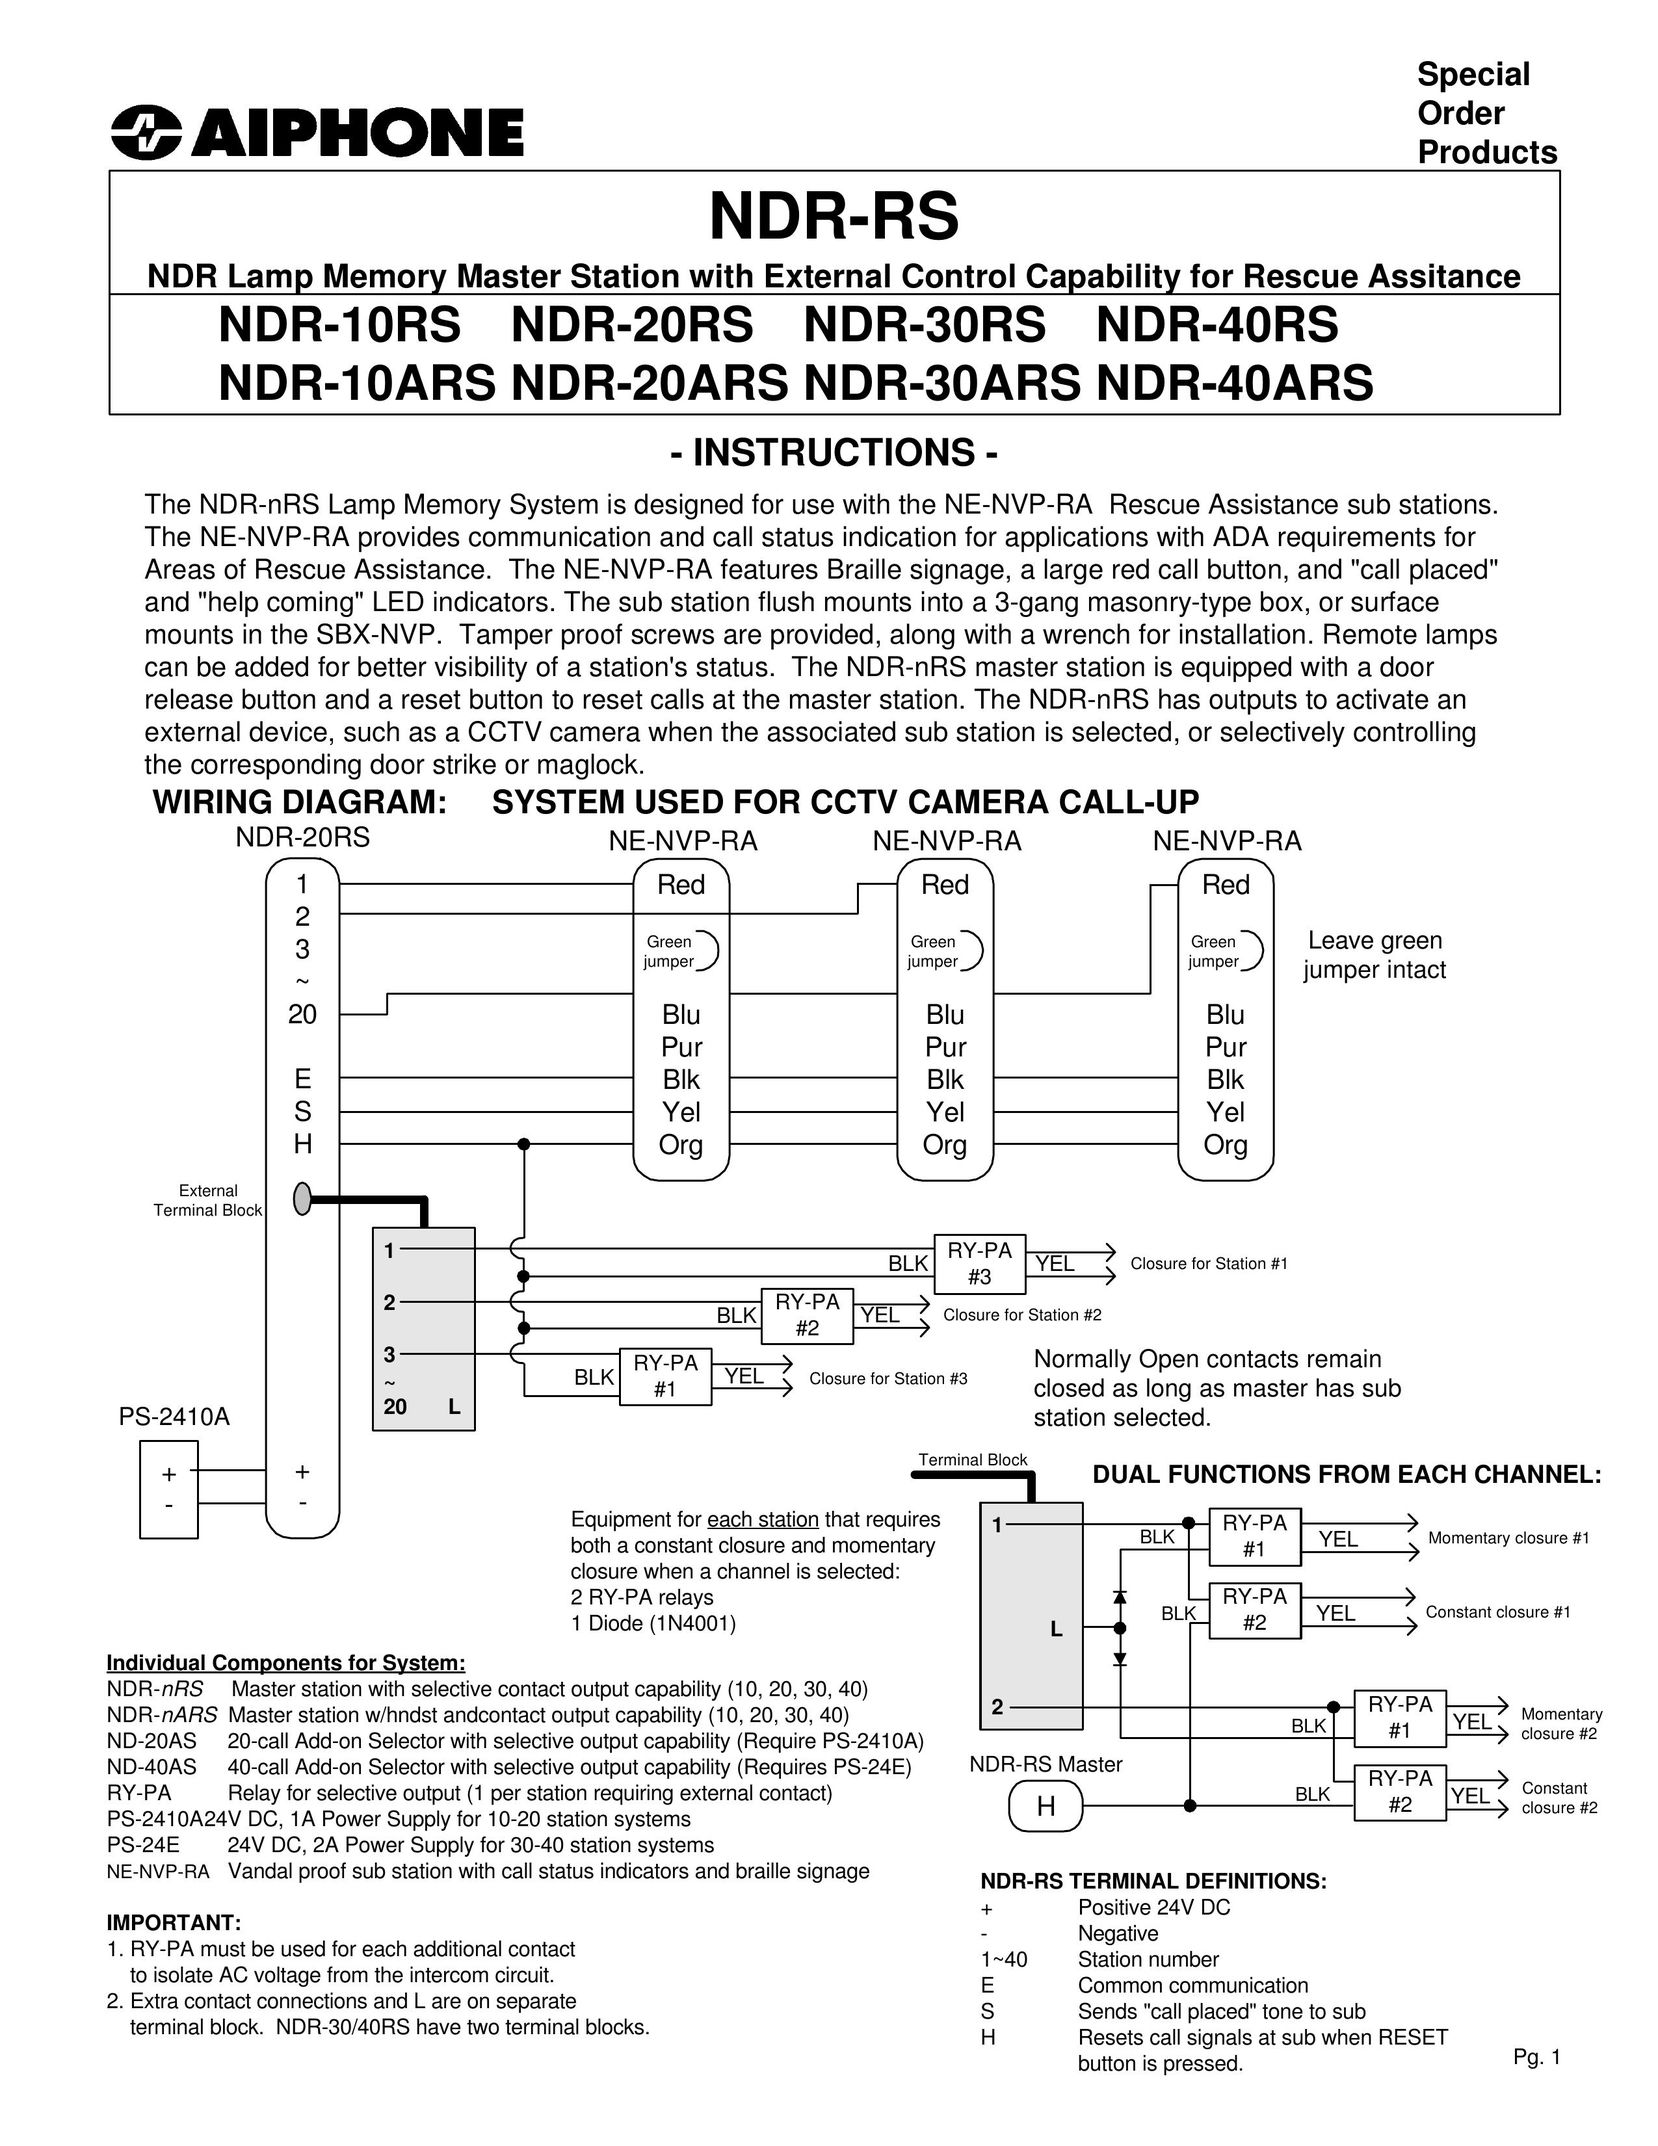 Aiphone NDR-30ARS Telephone User Manual